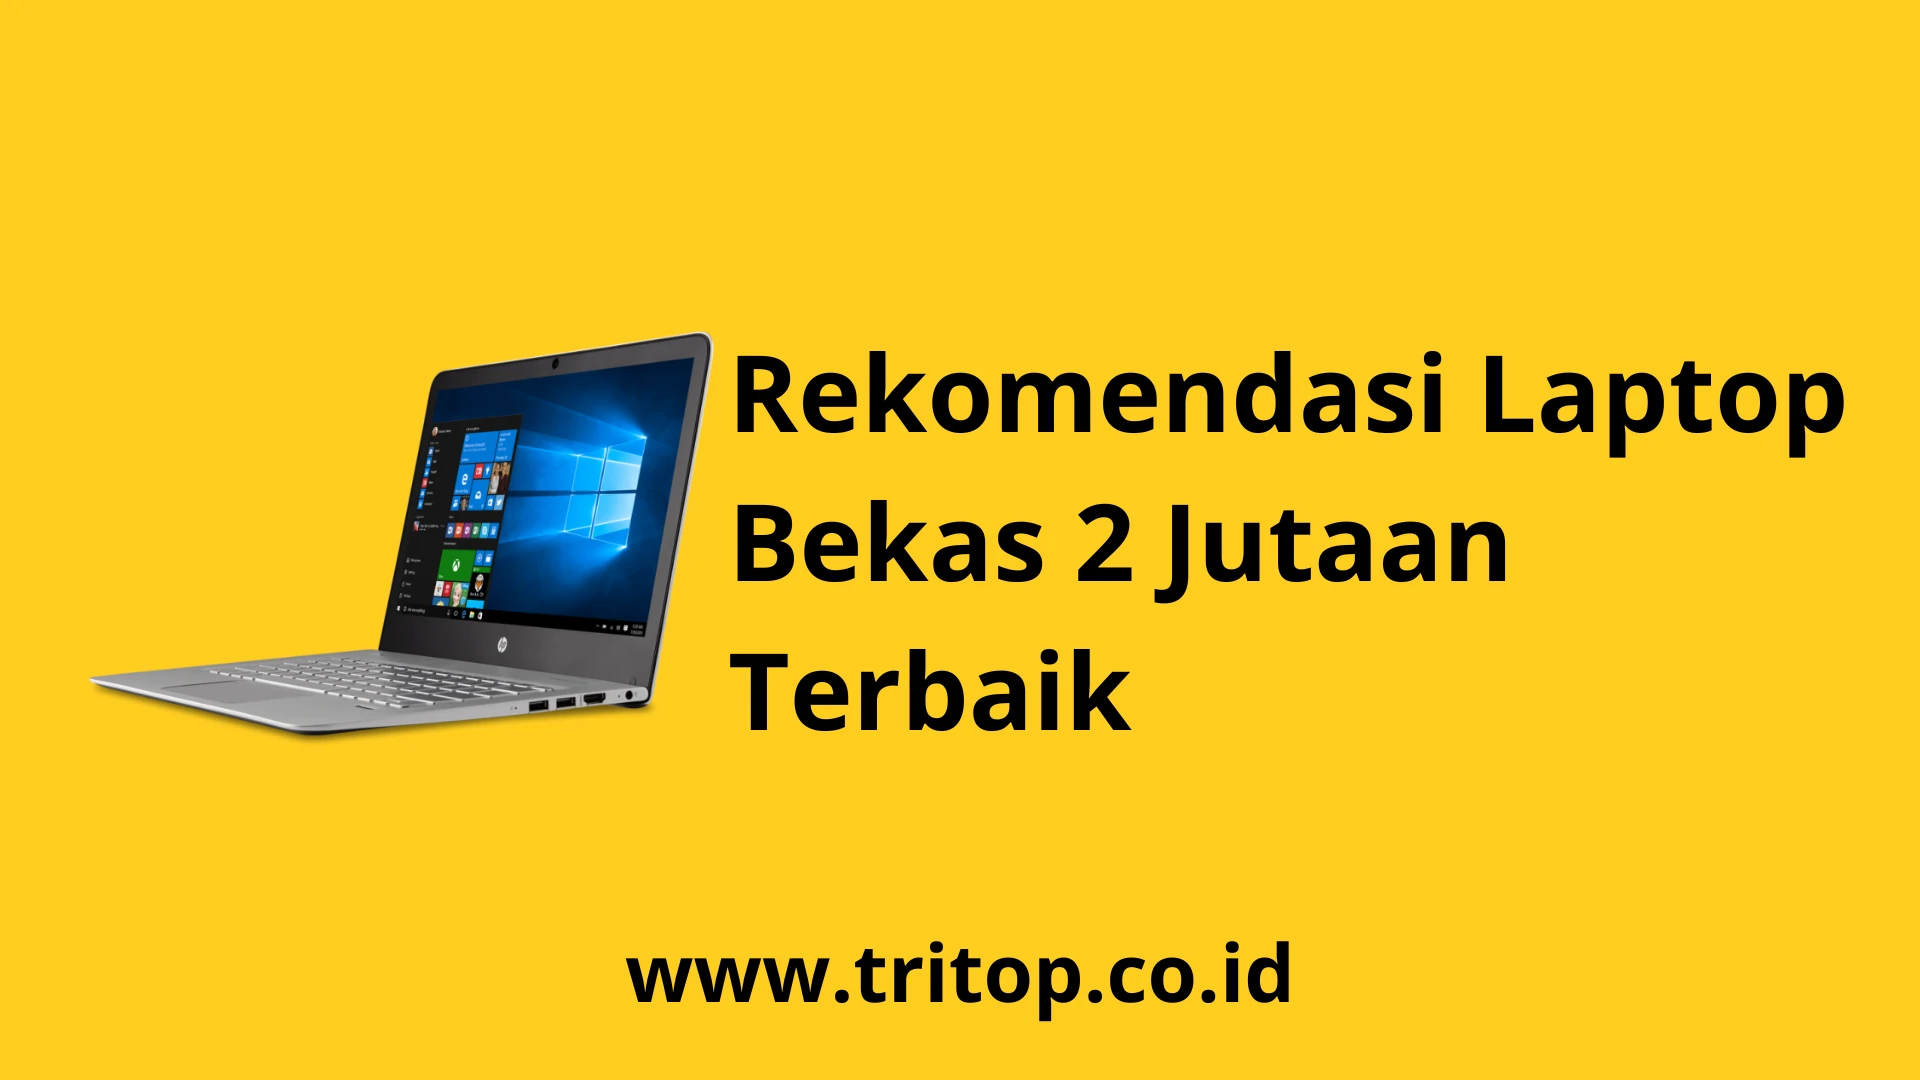 Laptop Bekas 2 Jutaan Terbaik Tritop.co.id